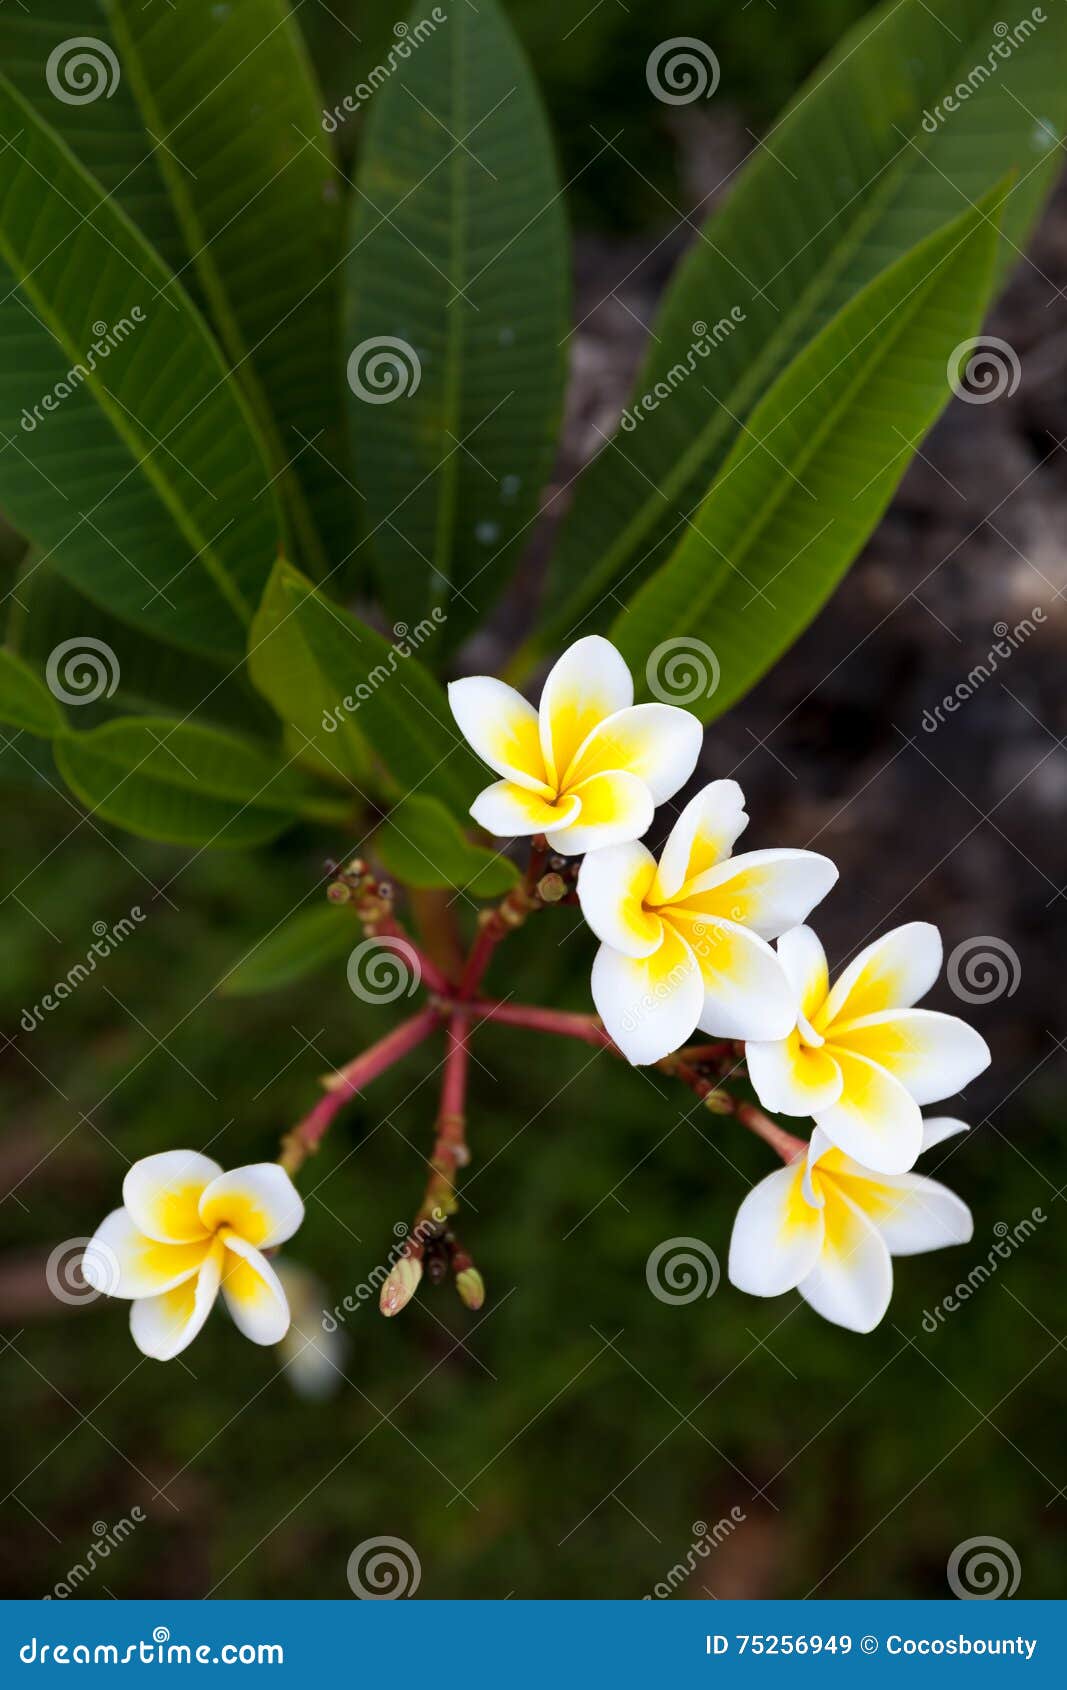 tropical flowers frangipani (plumeria) on green background